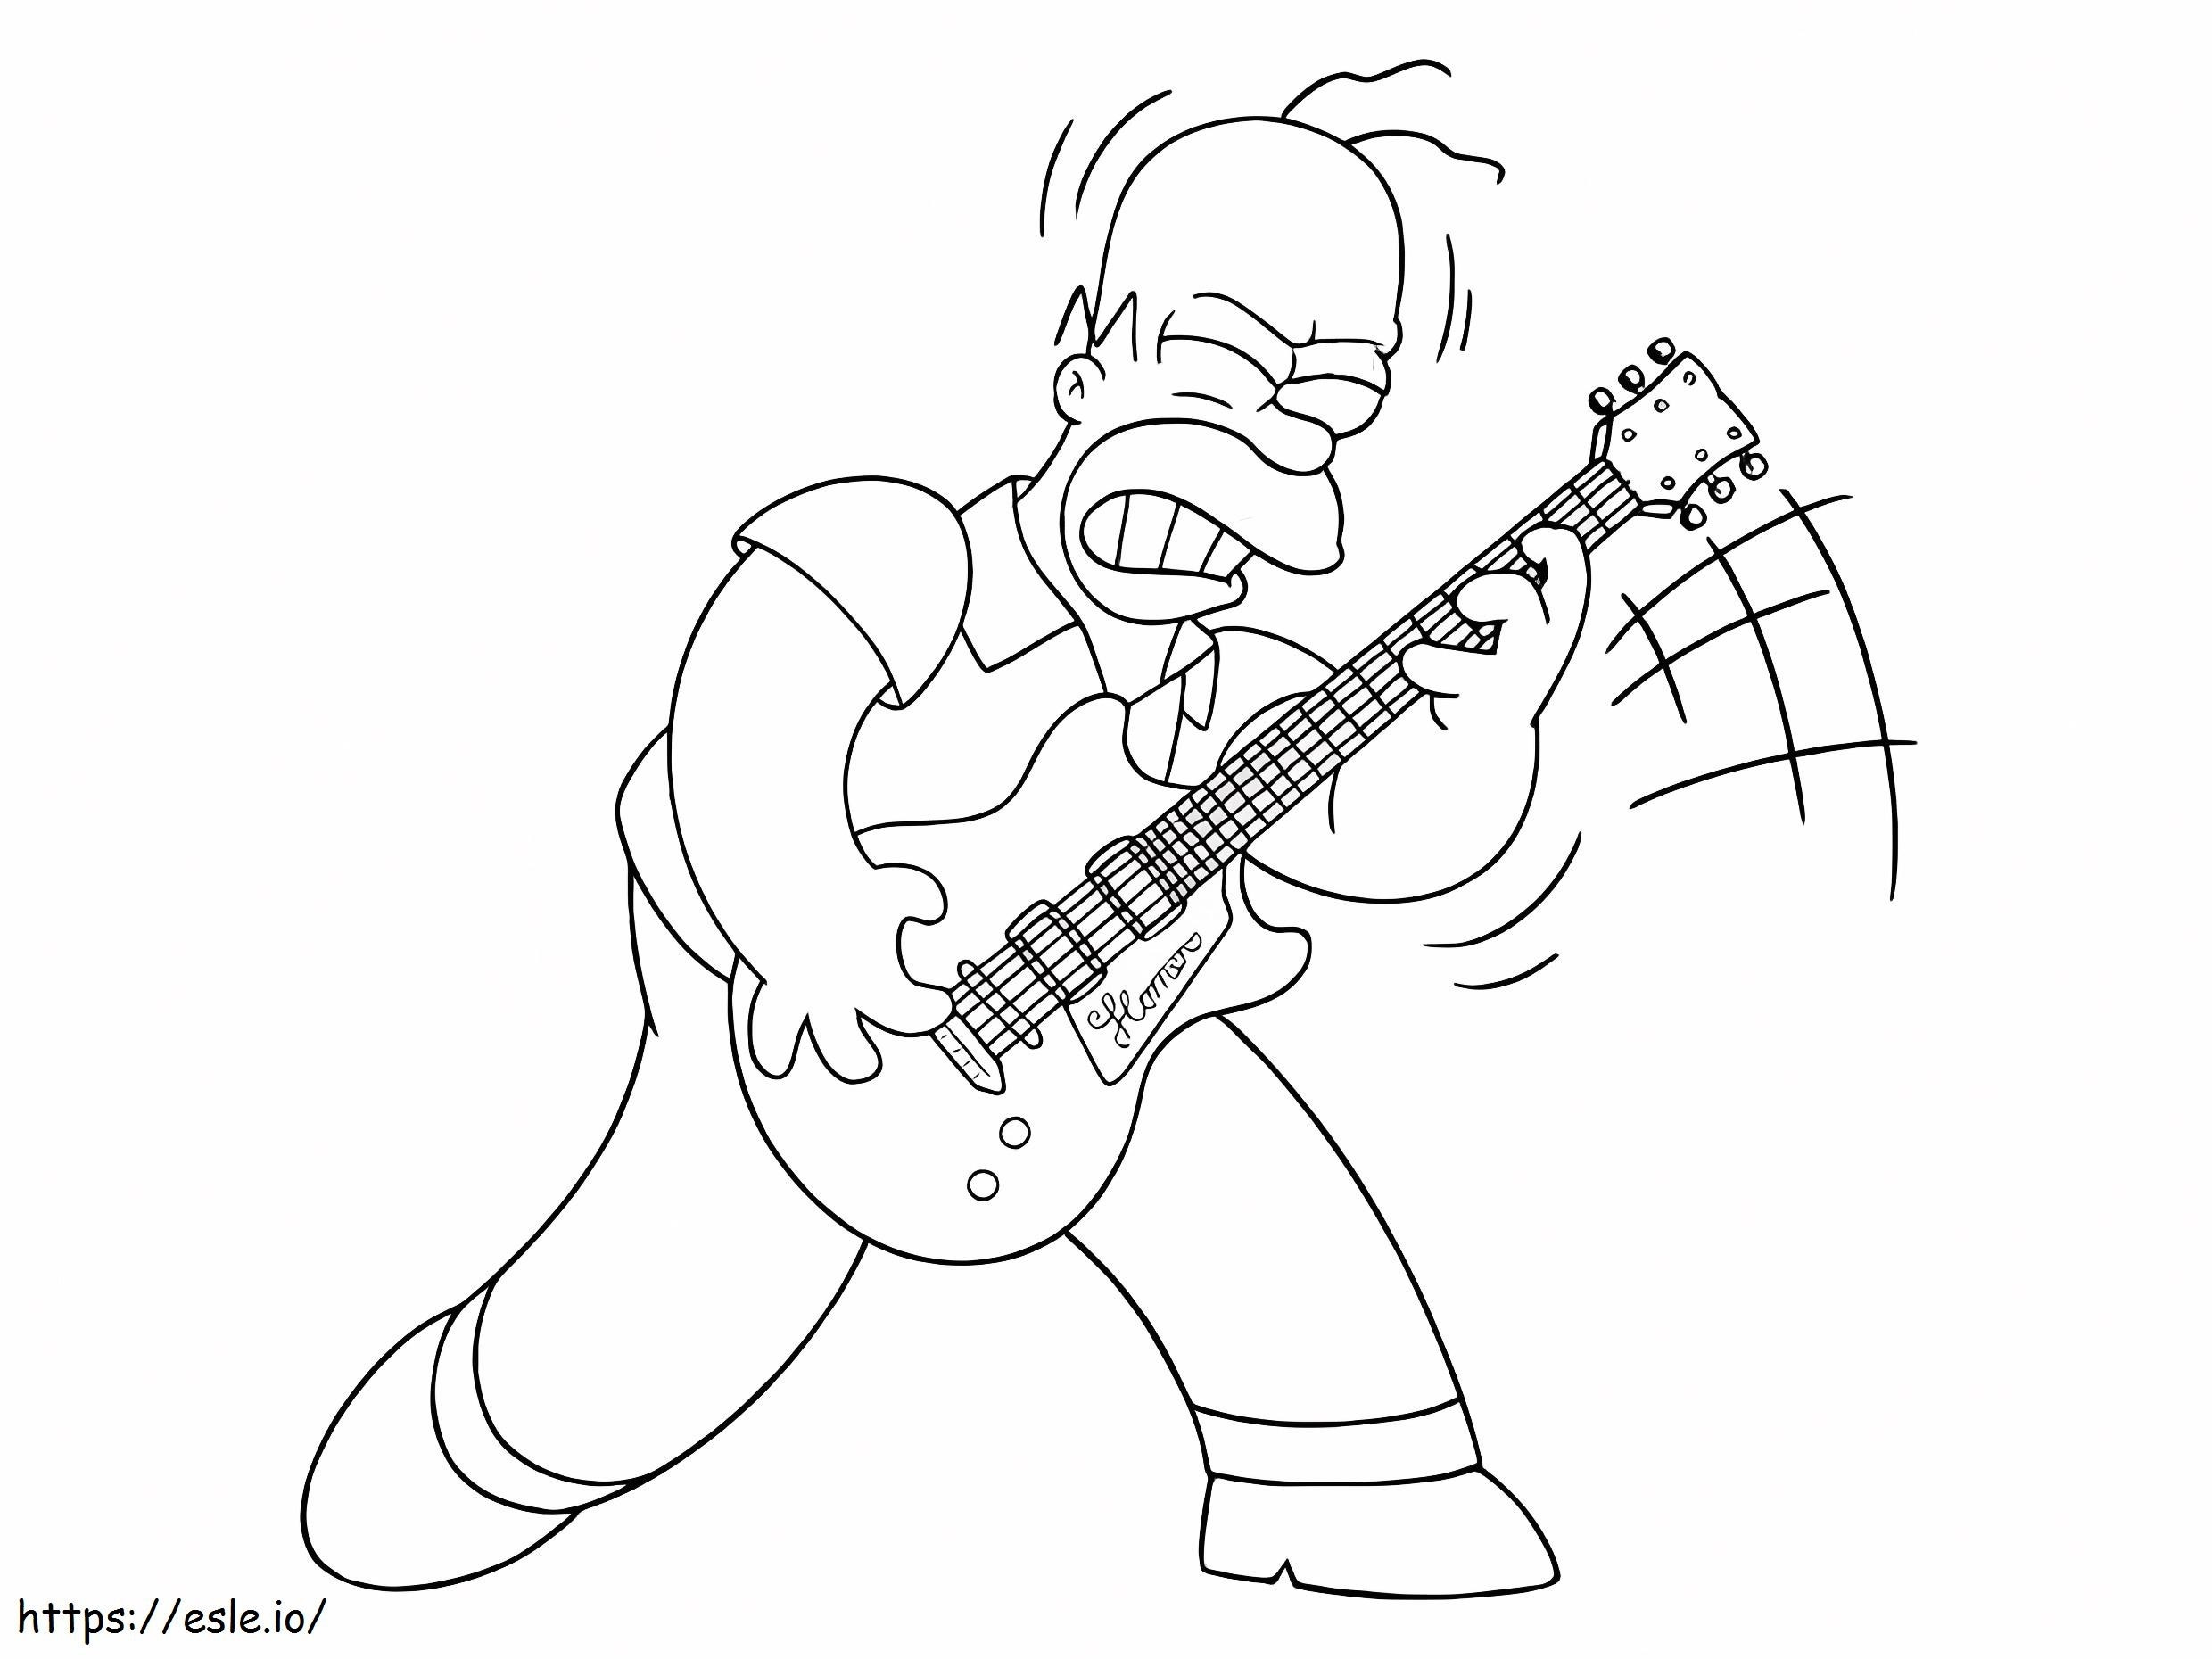 Hommer gra na gitarze 2 kolorowanka